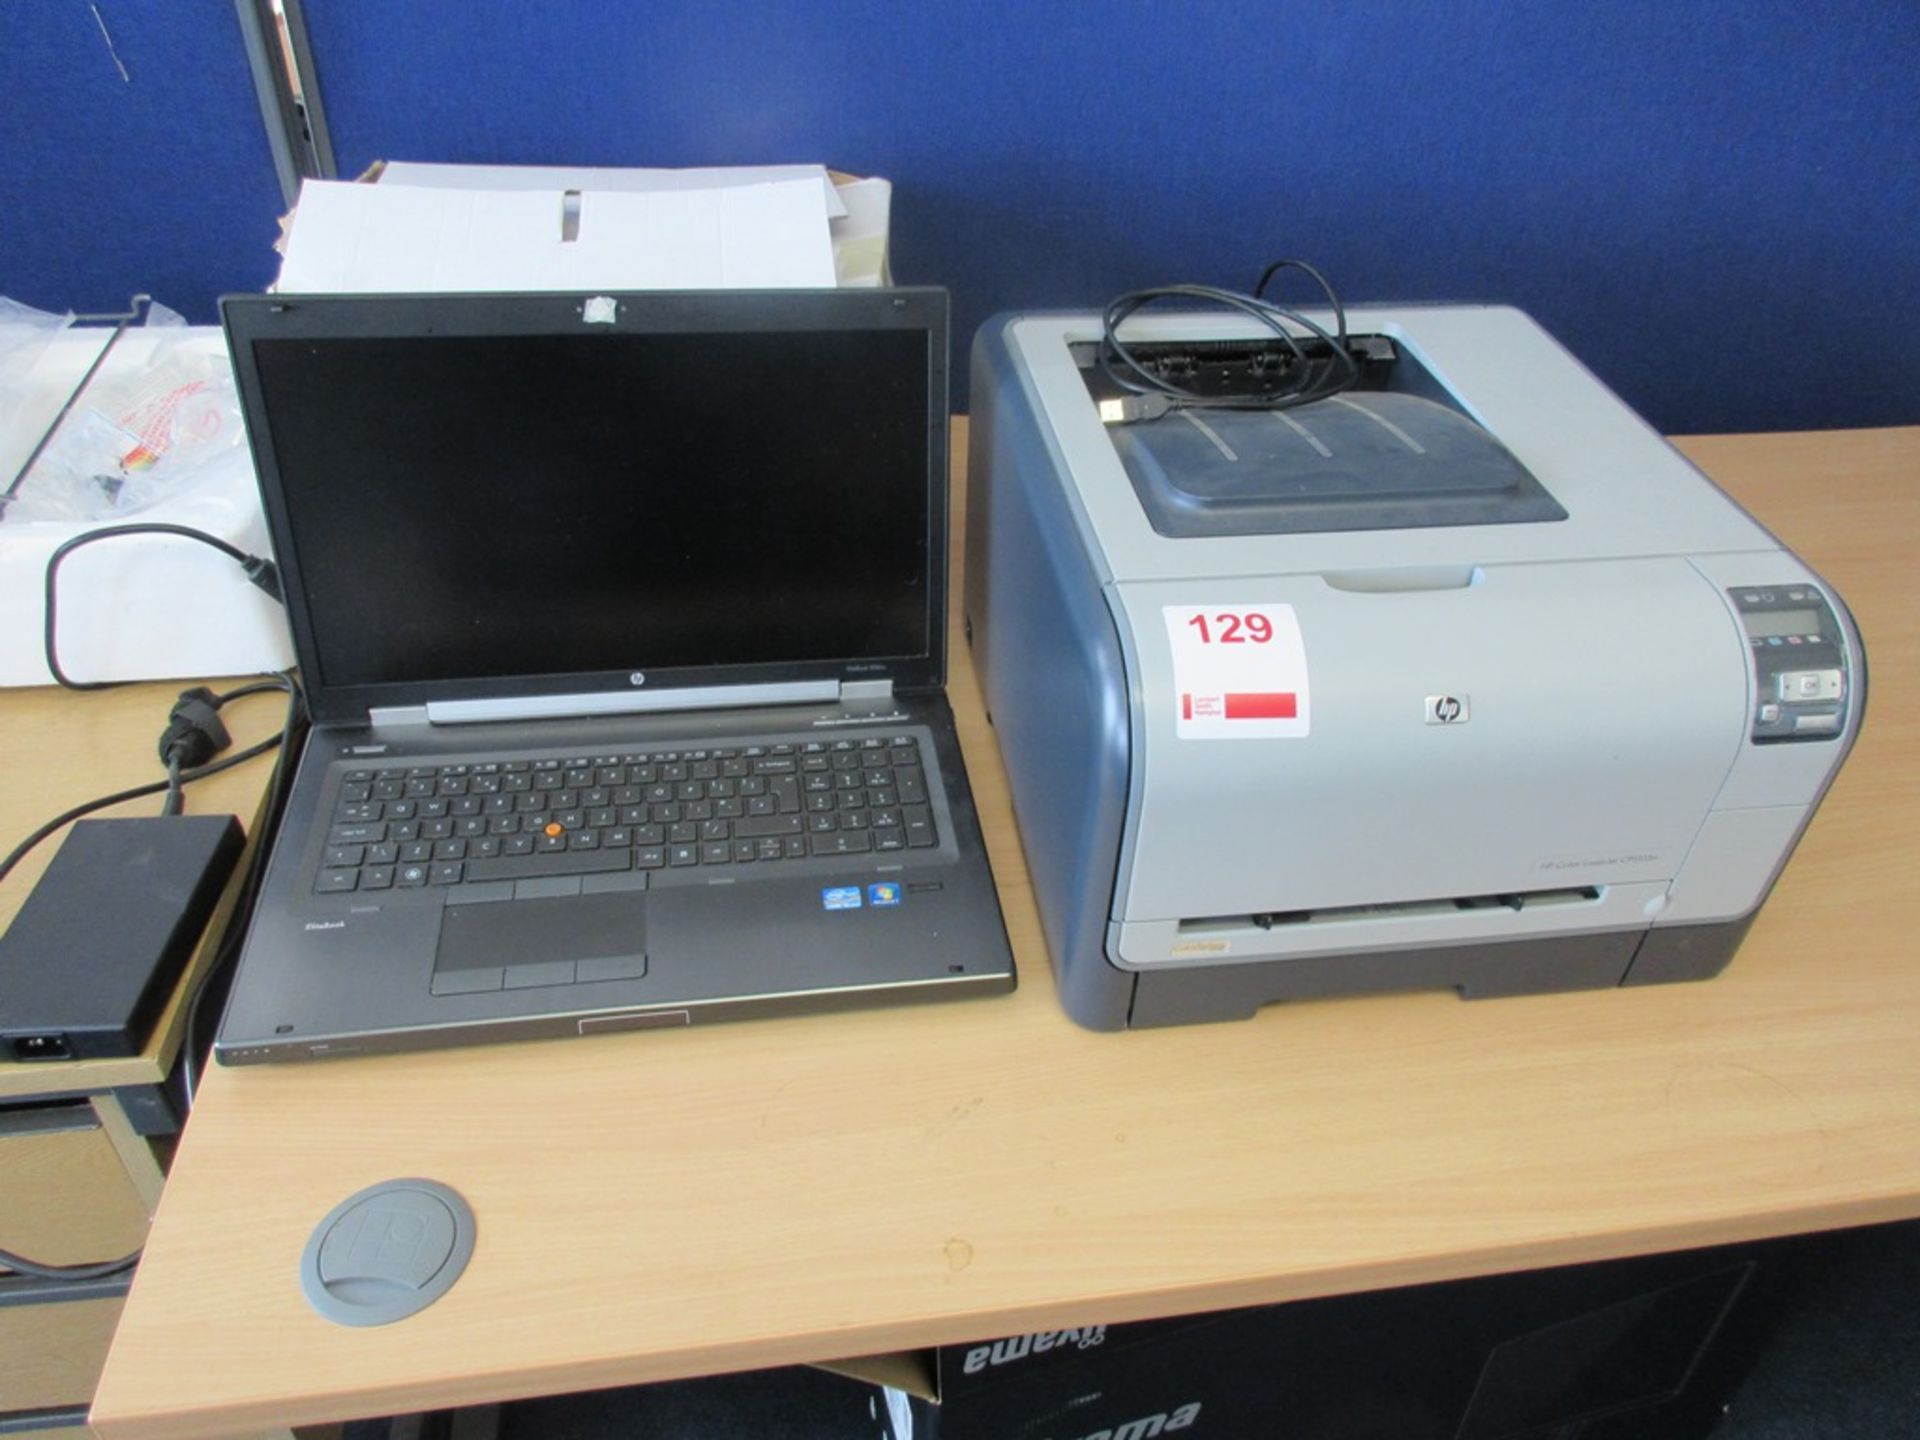 HP Elitebook Core i5 laptop and HP color Laserjet CP1515n printer